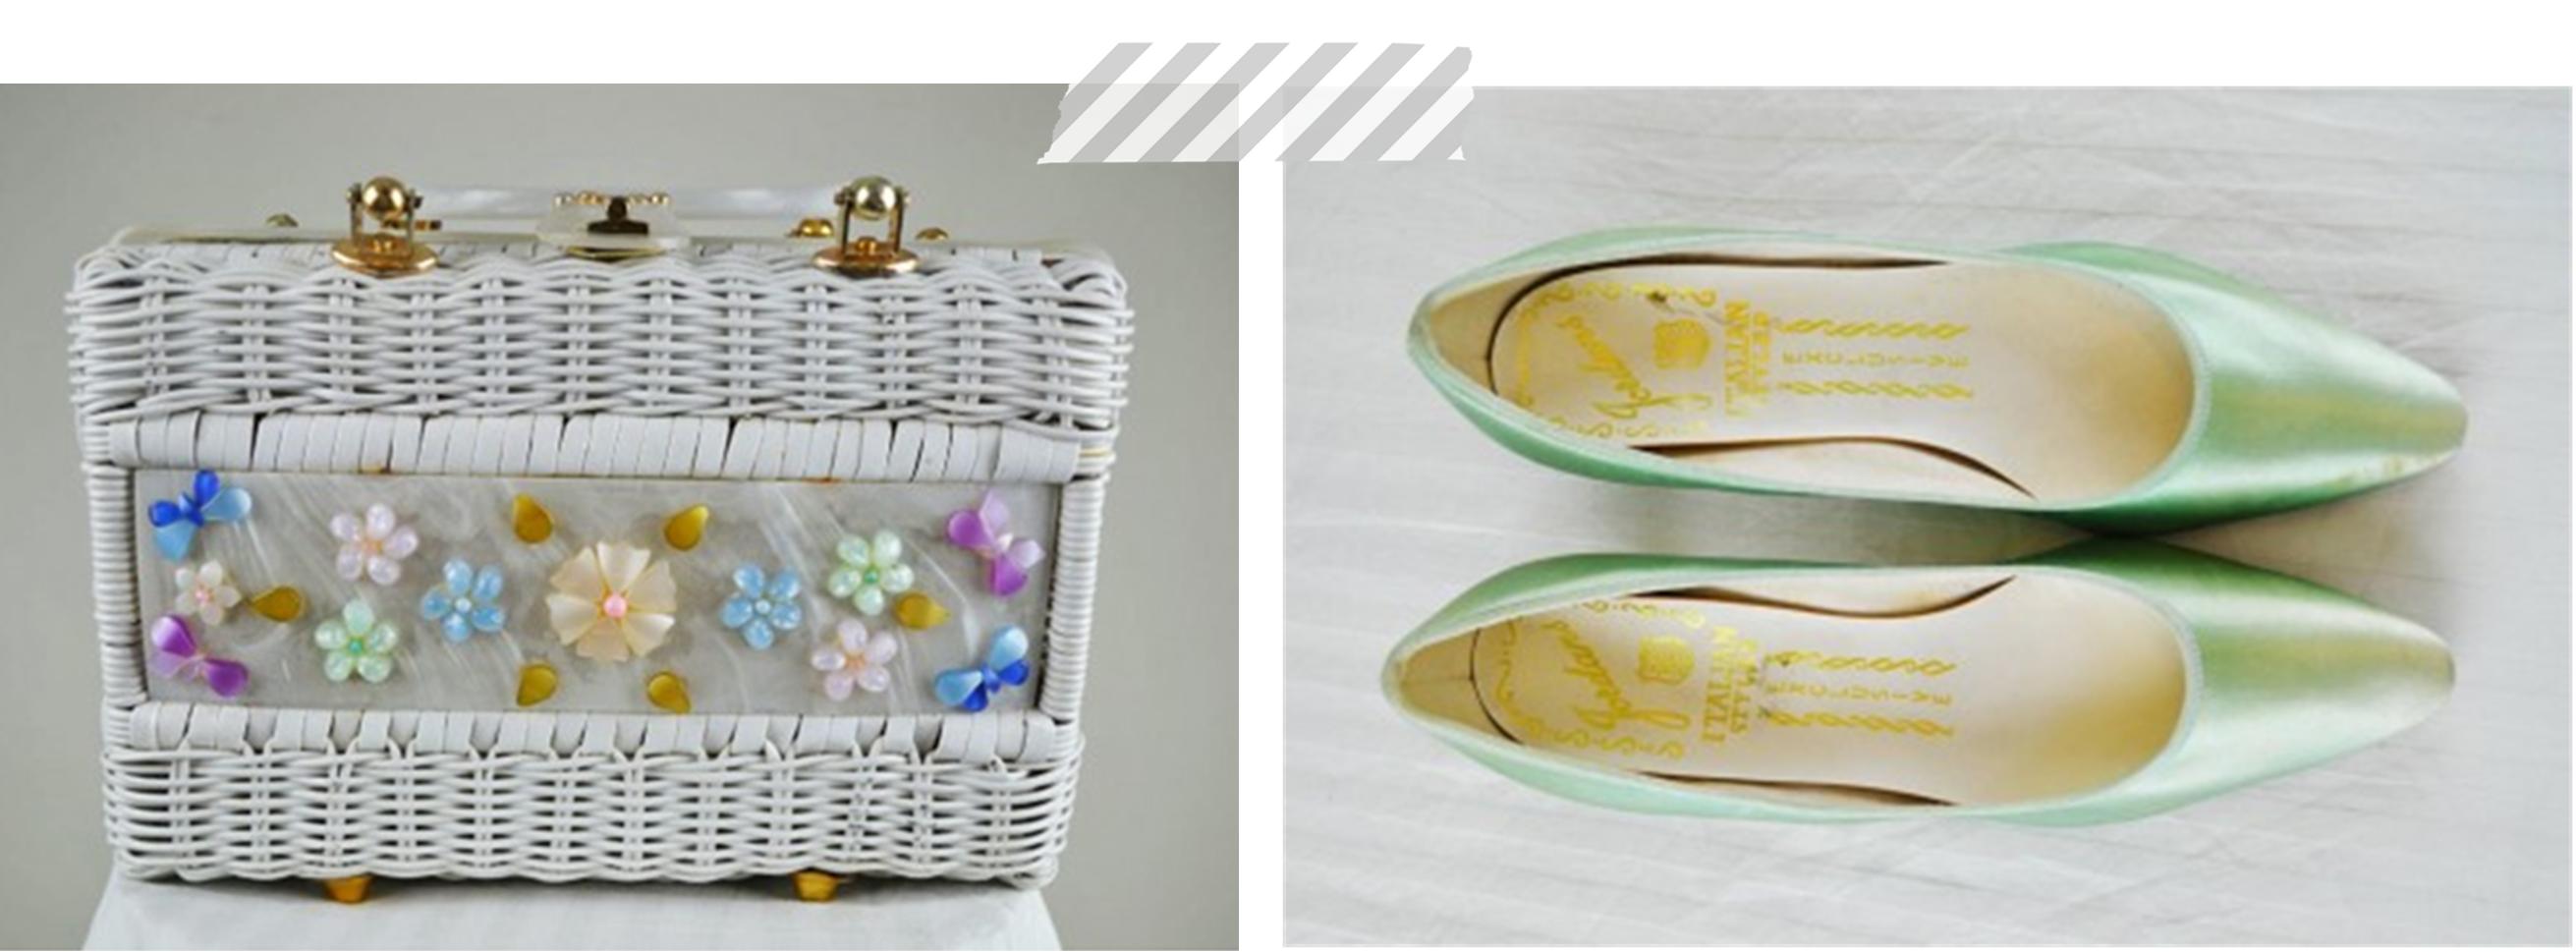 Summer 2013 vintage accessories floral handbag and mint satin shoes from Mela Mela